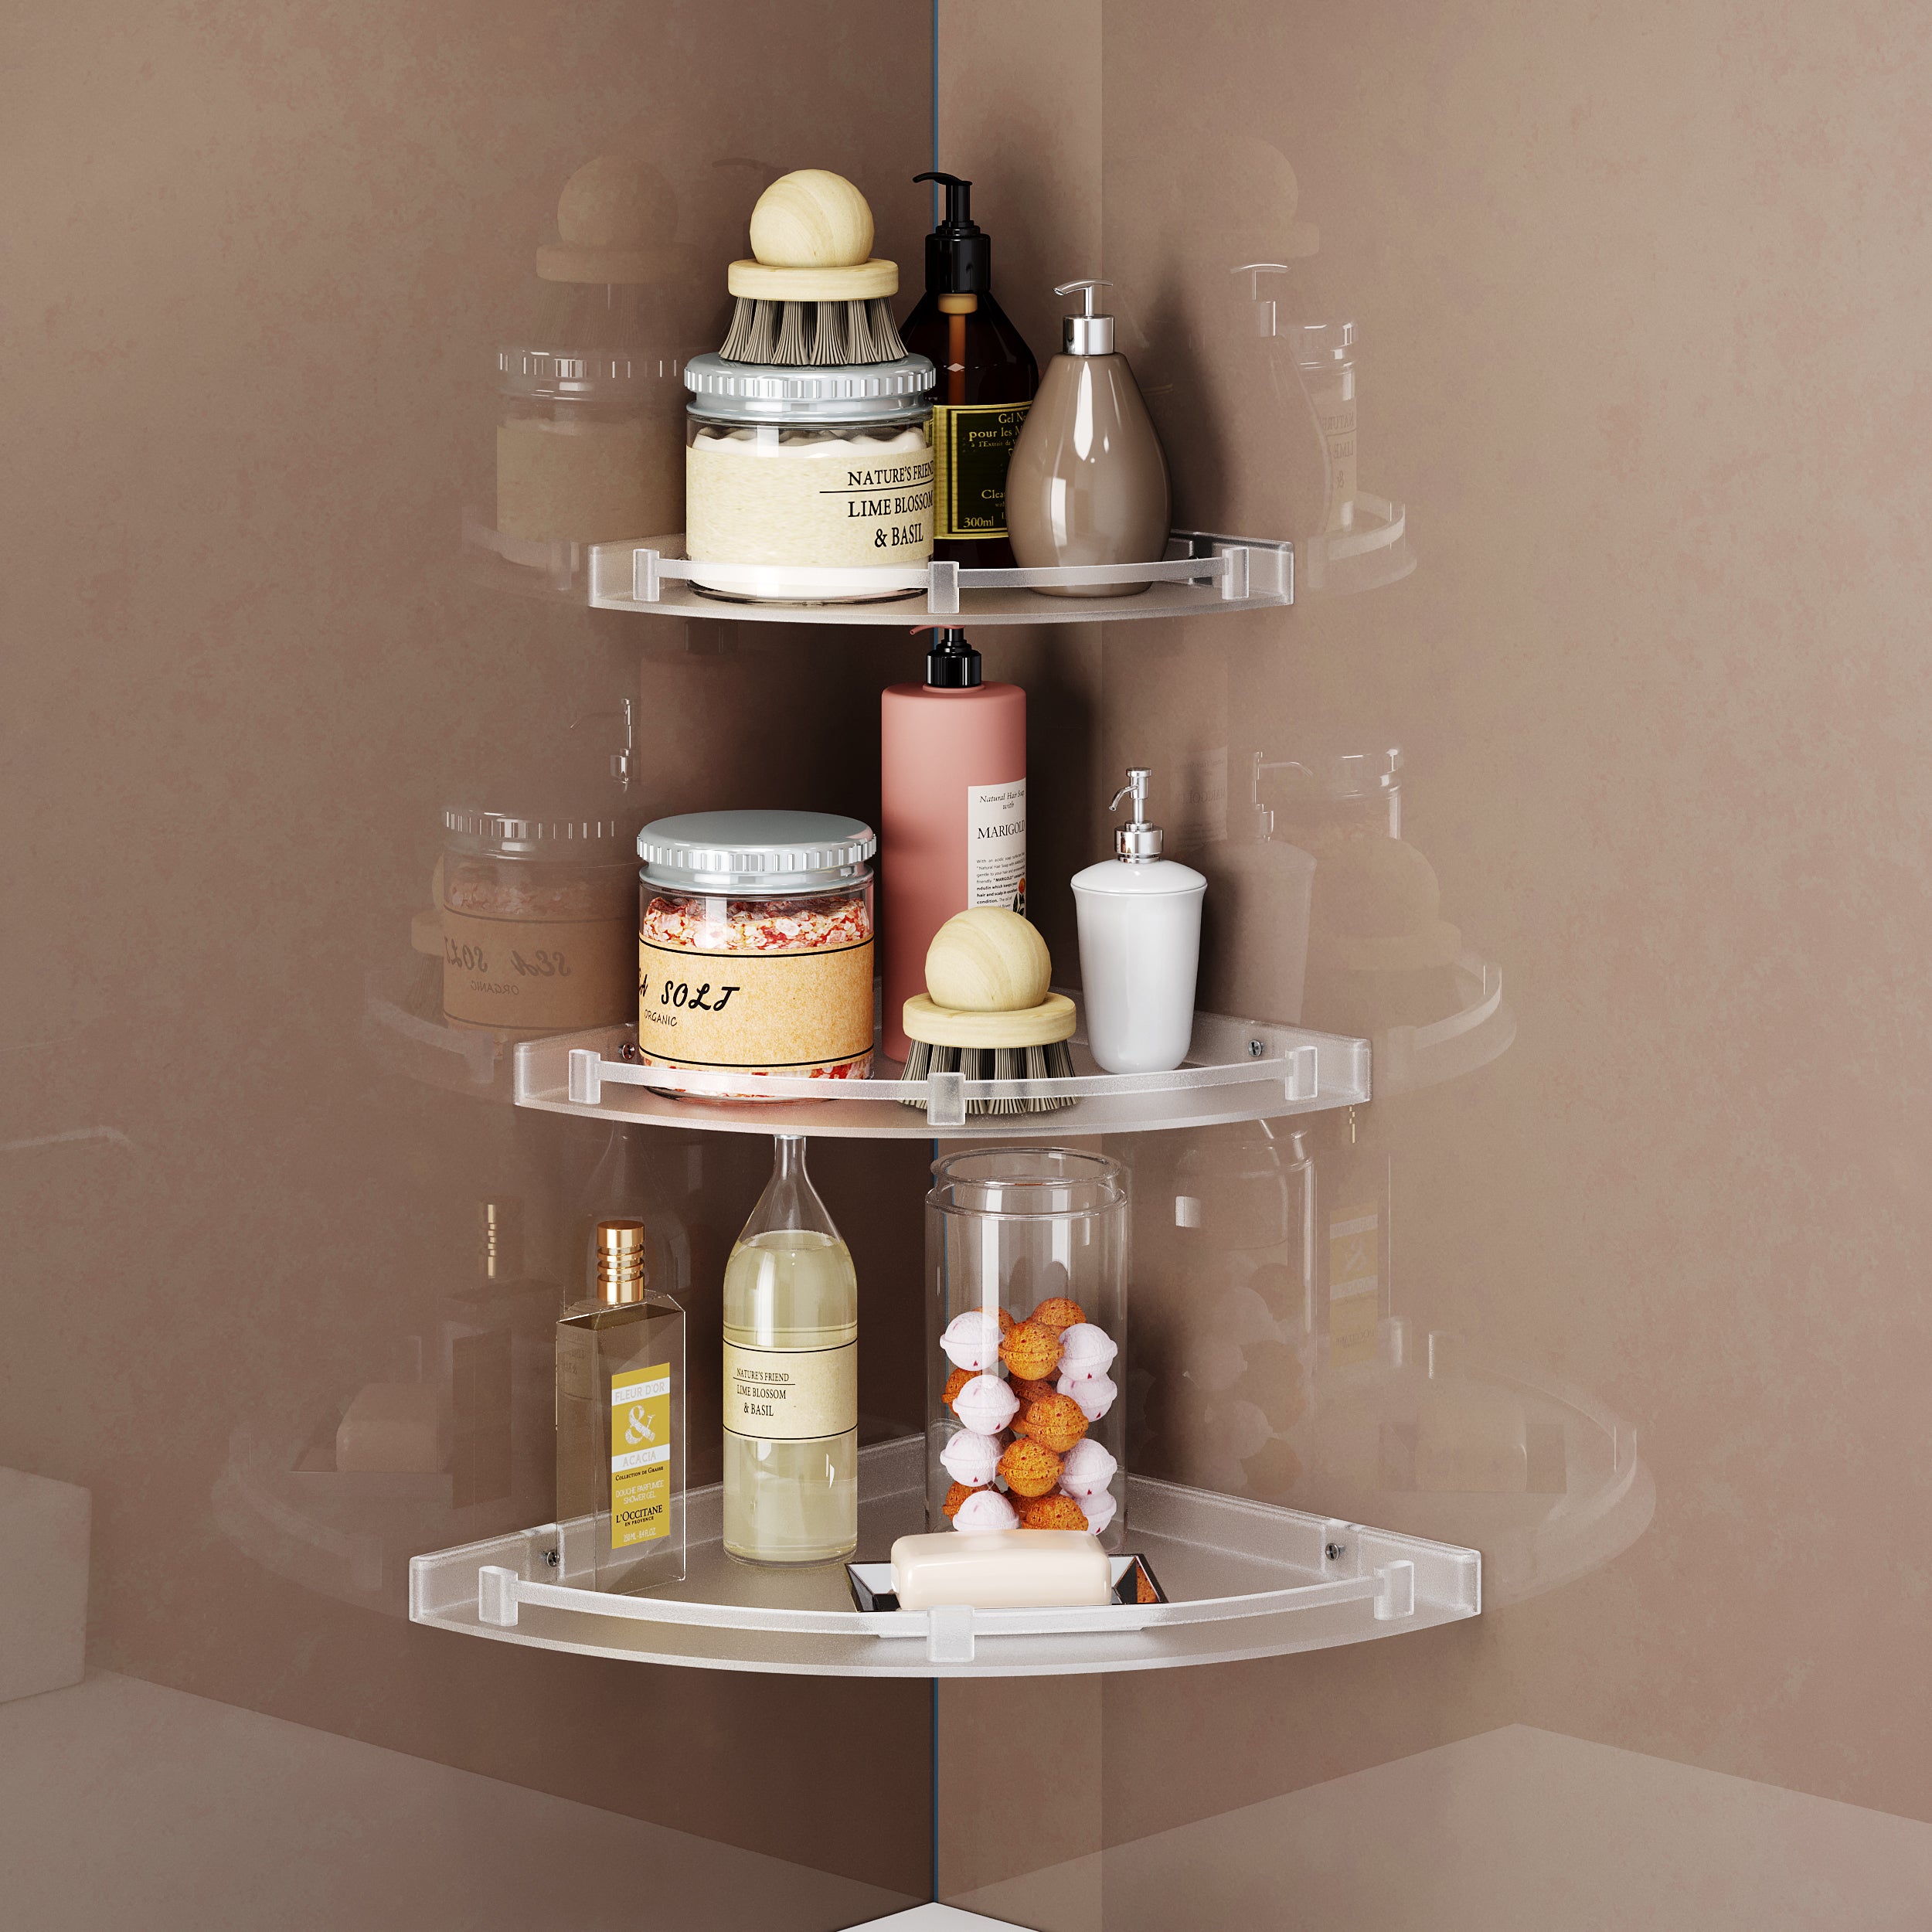 Unbreakable Transparent ABS Acrylic Corner Wall Shelf Set - 3 Pieces - Bathroom & Living Room Storage